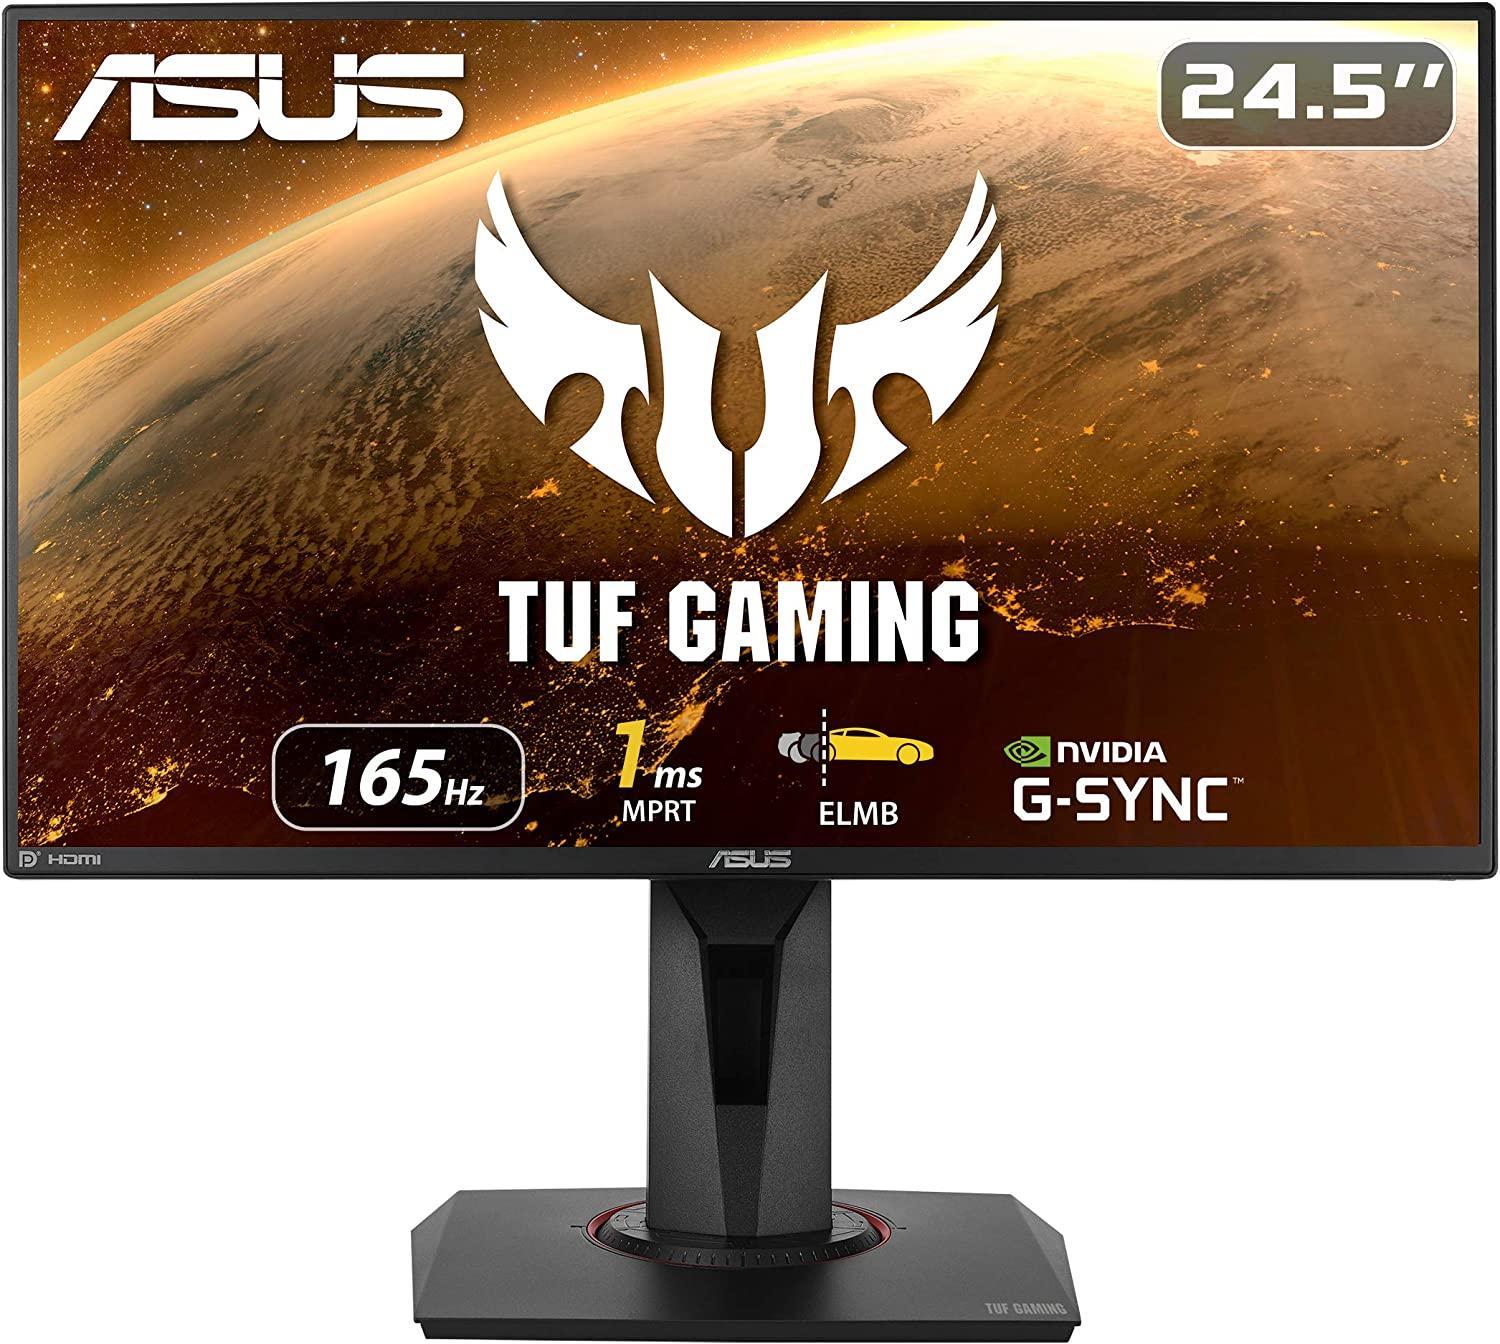 ASUS TUF Gaming 24.5" 1080P Monitor (VG259QR) - Full HD, 165Hz, 1ms, Extreme Low Motion Blur, Speaker, G-SYNC Compatible, Shadow Boost, VESA Mountable, DisplayPort, HDMI, Height Tilt Swivel Adjustable